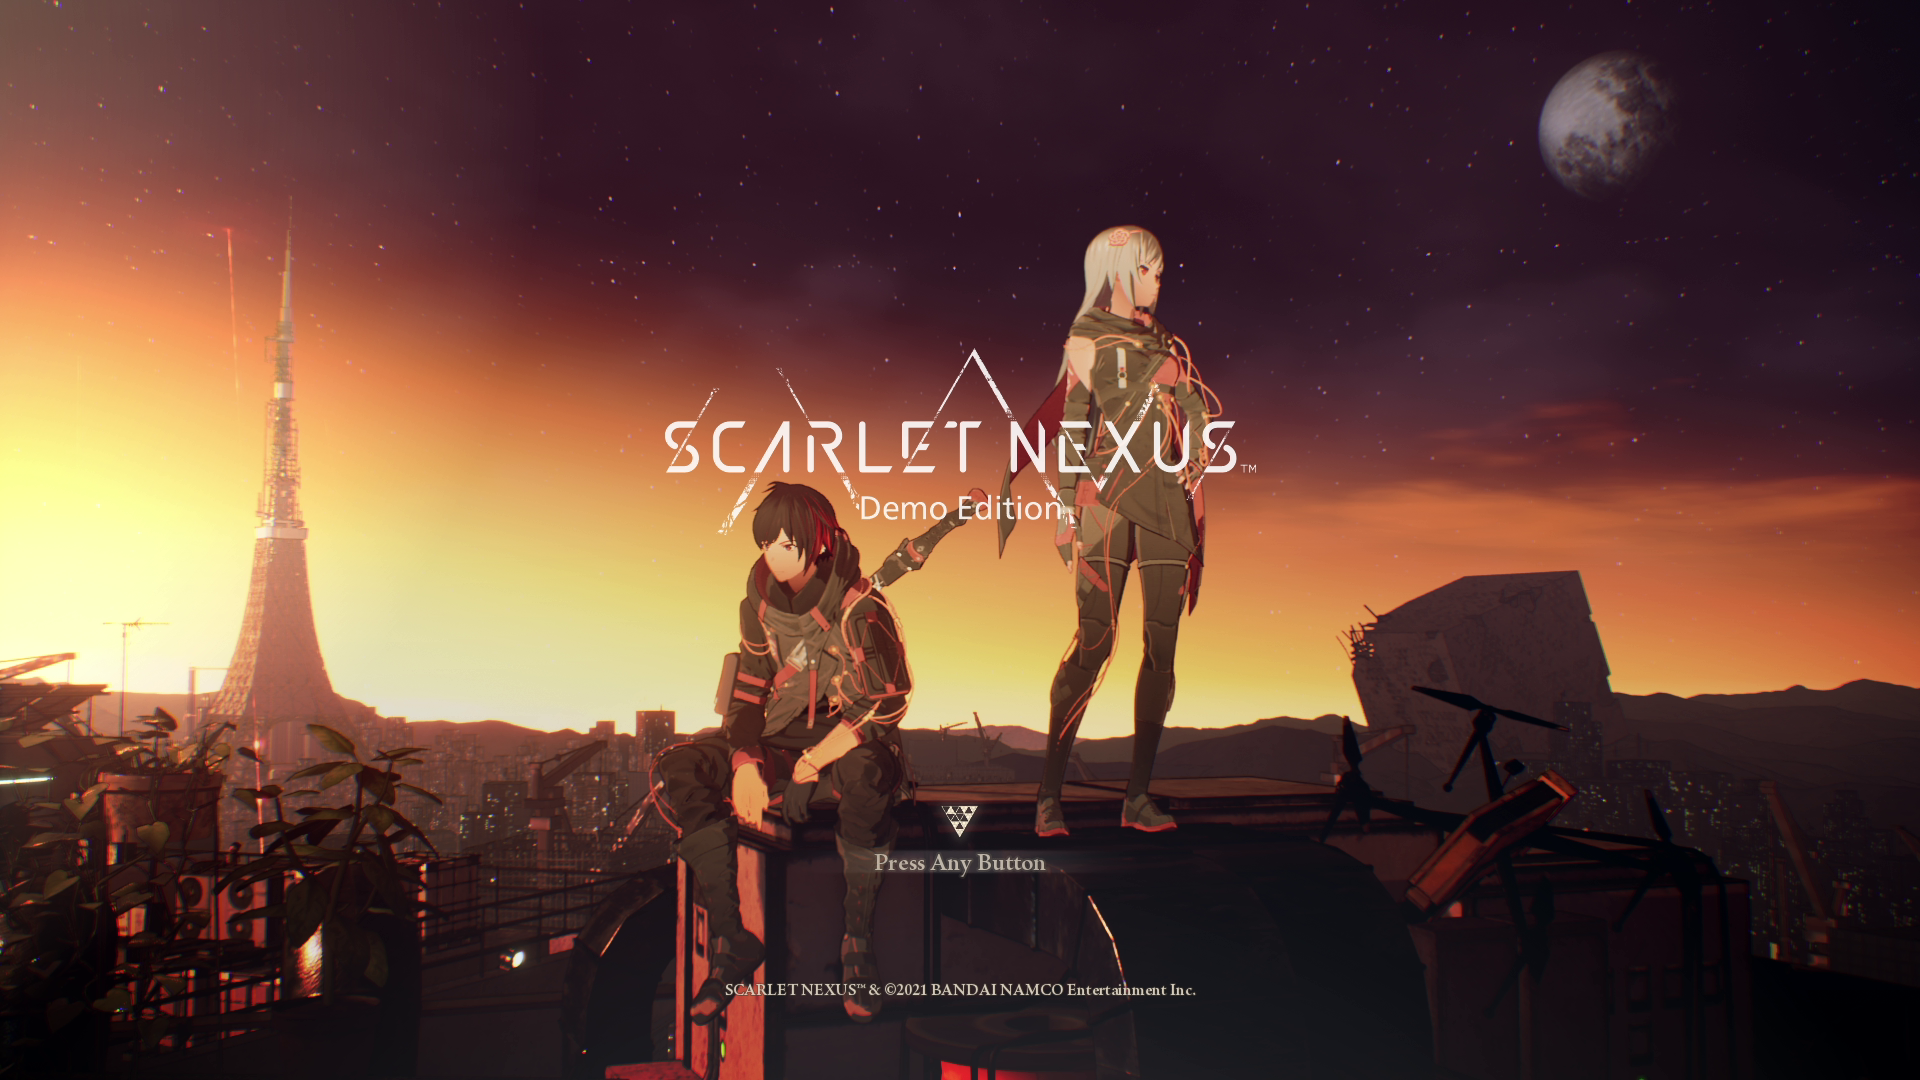 New Scarlet Nexus Wallpapers